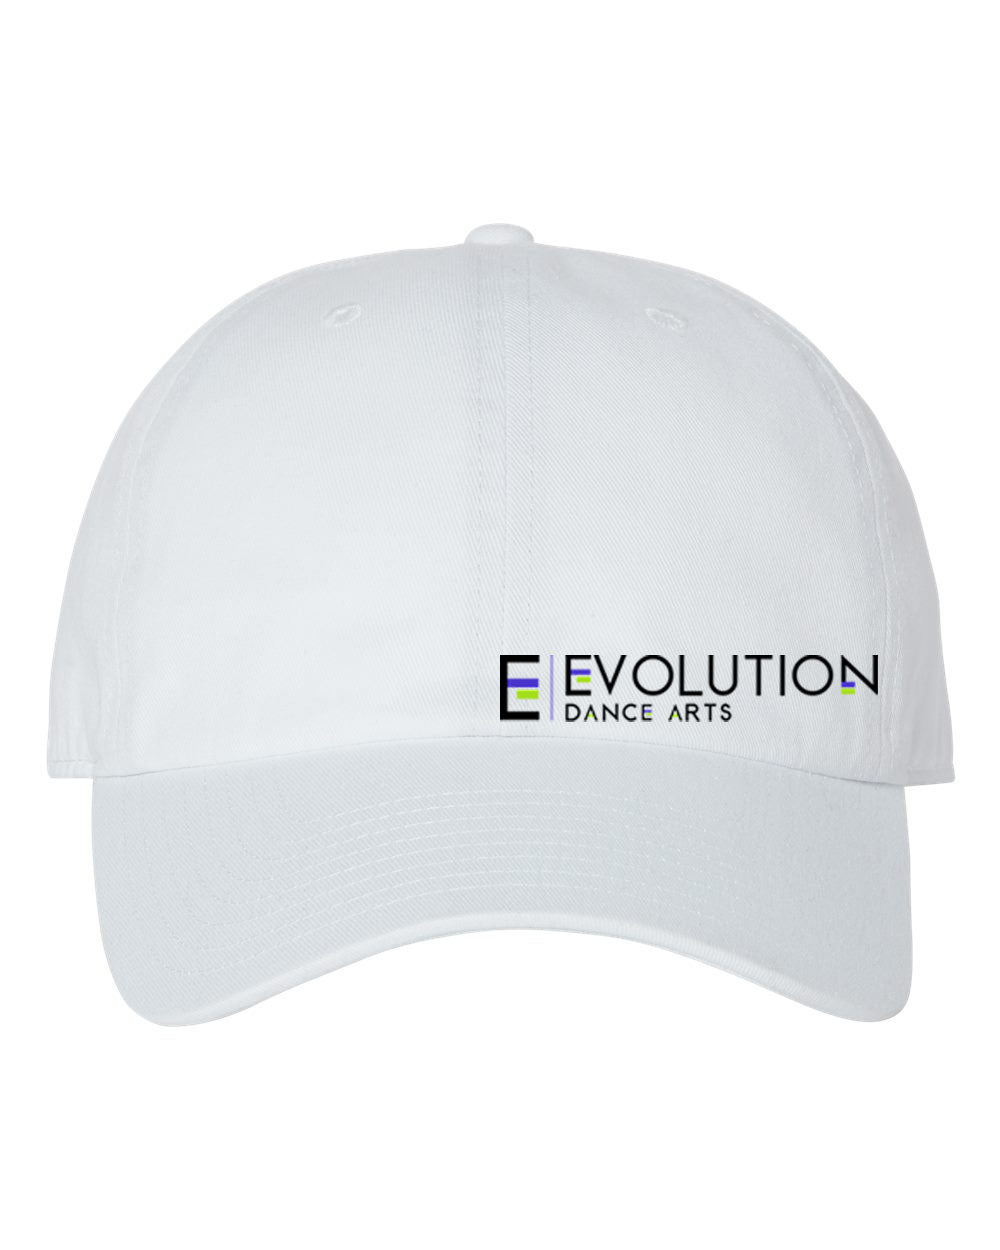 Evolution Dance Arts Design 1 Trucker Hat